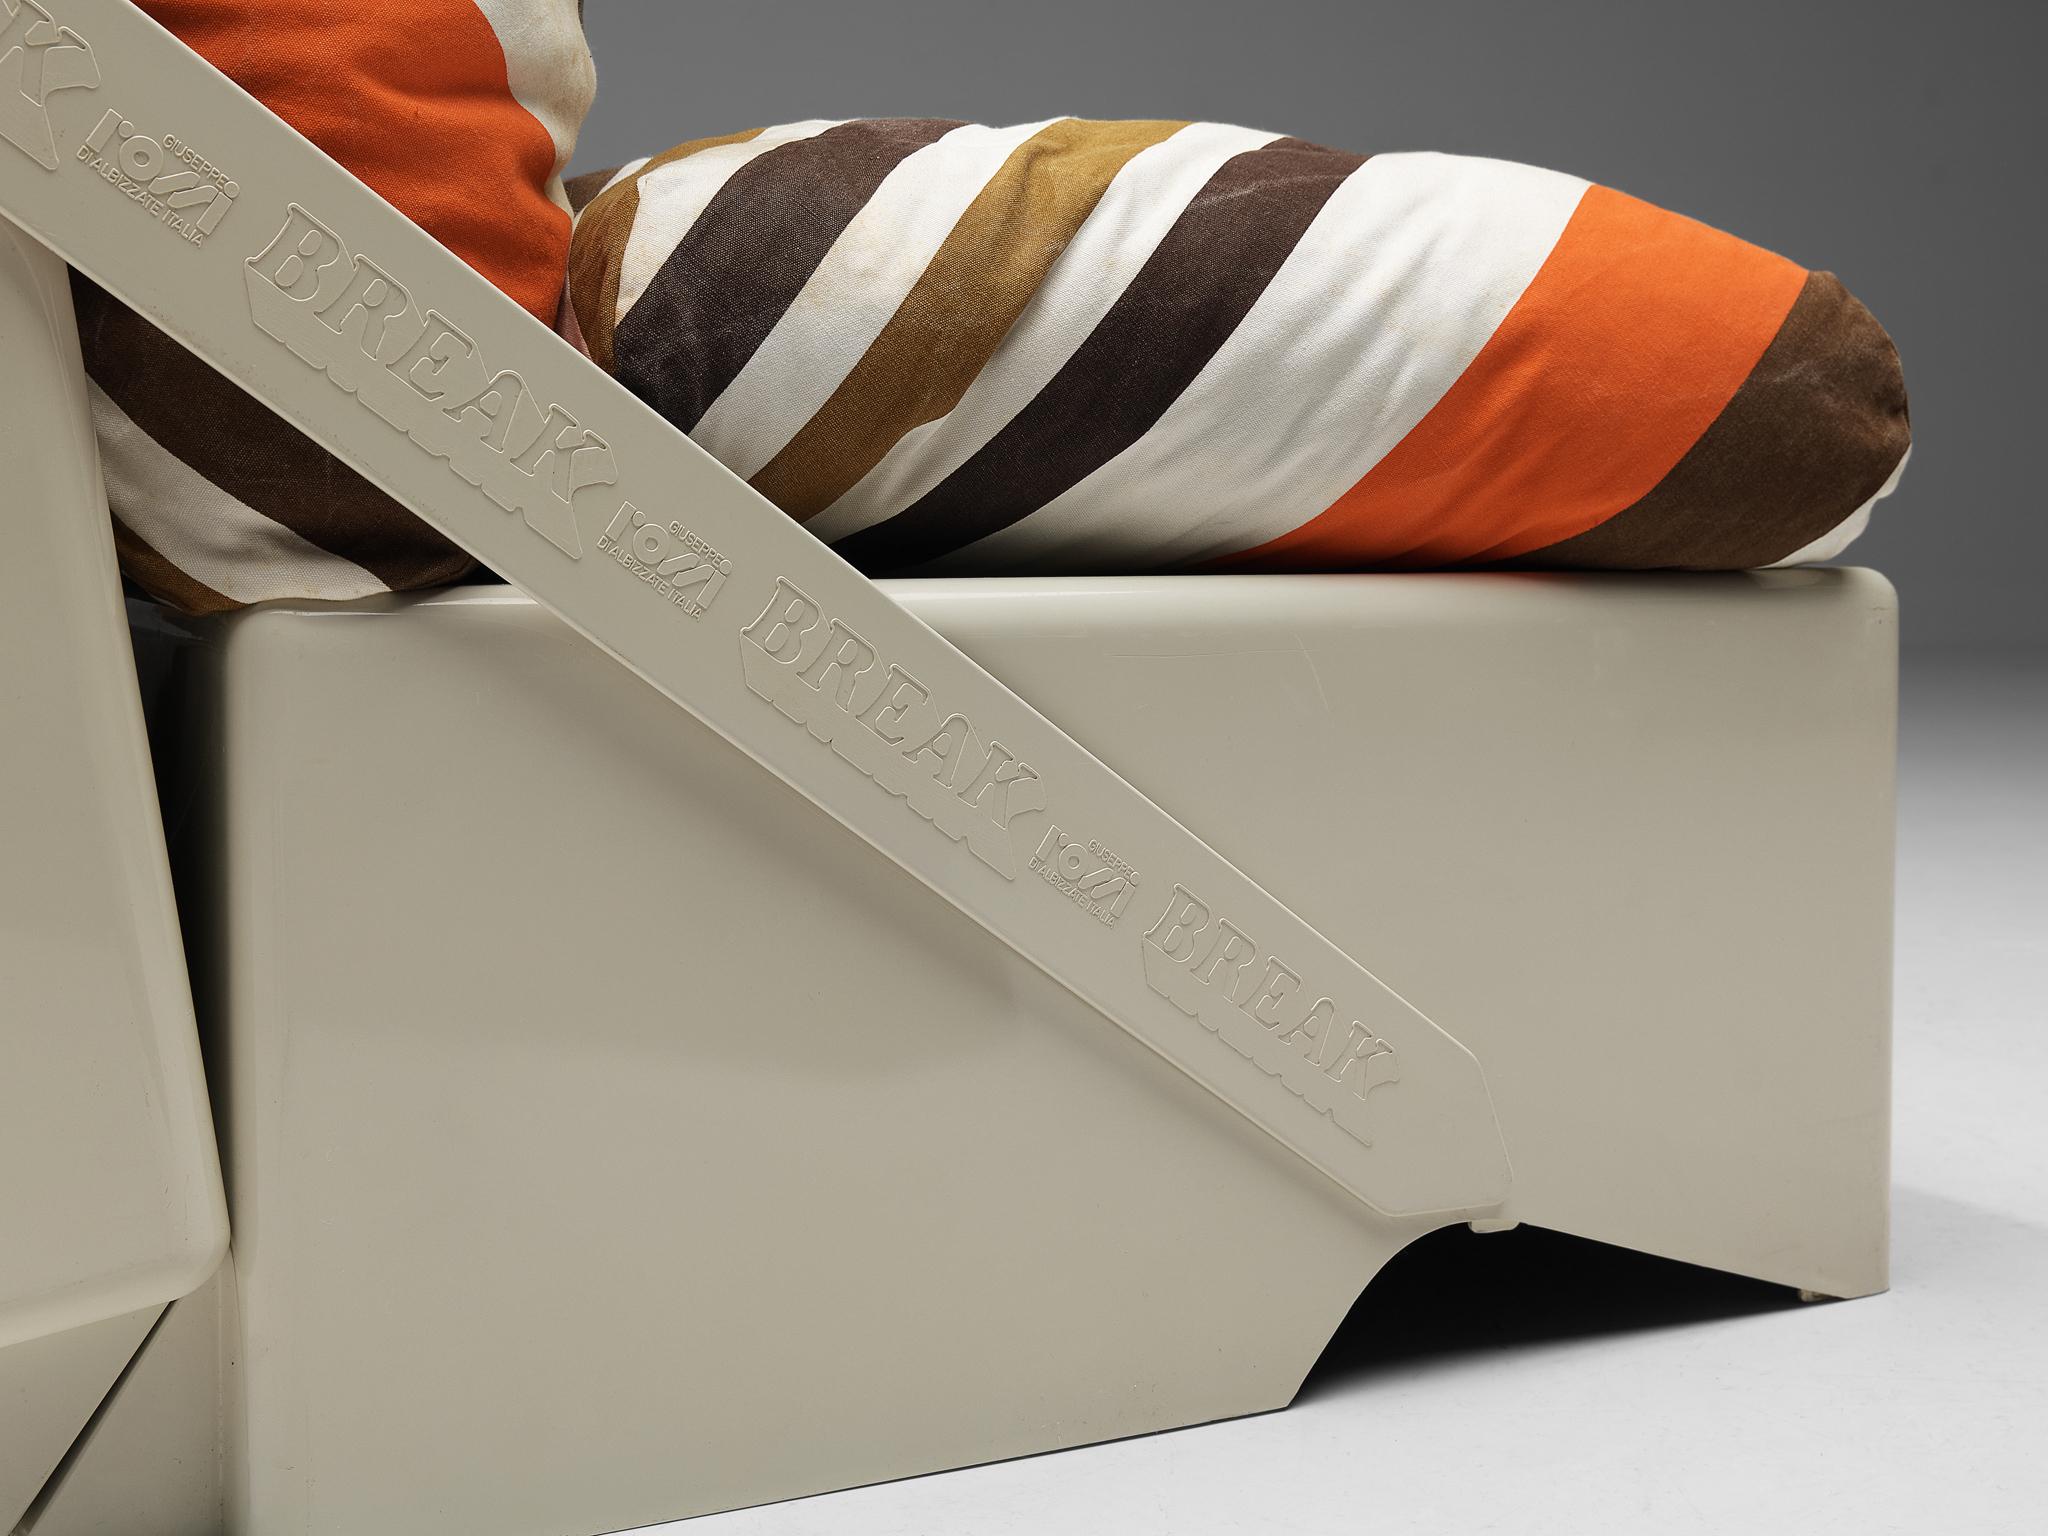 Aldo Barberi for Rossi di Albizzate ‘Break’ Portable Folding Lounge Chairs In Good Condition For Sale In Waalwijk, NL